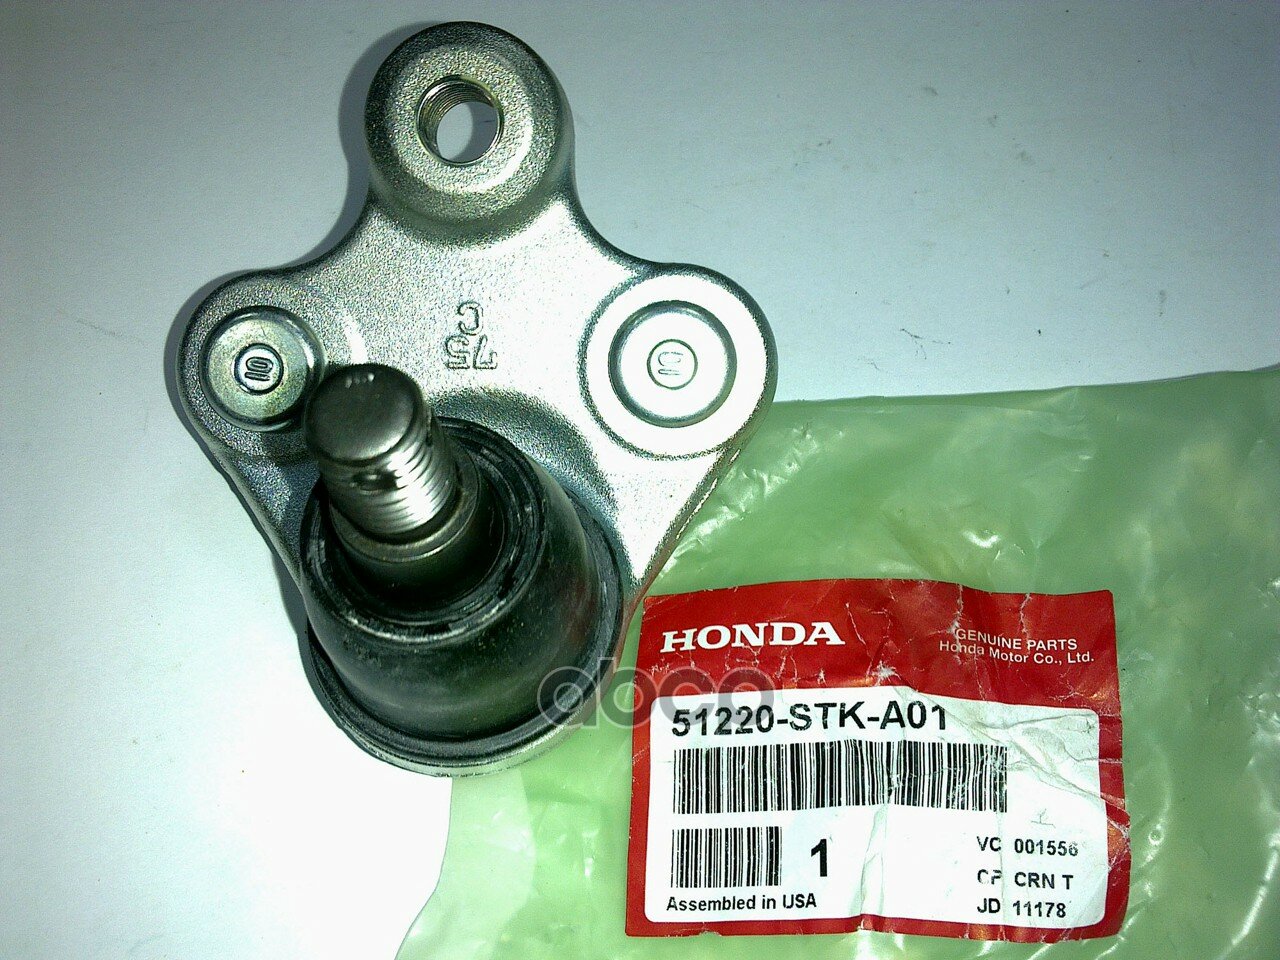 Опора шаровая переднего нижнего рычага Honda (Хонда) 51220-STK-A01 (51220STKA01)